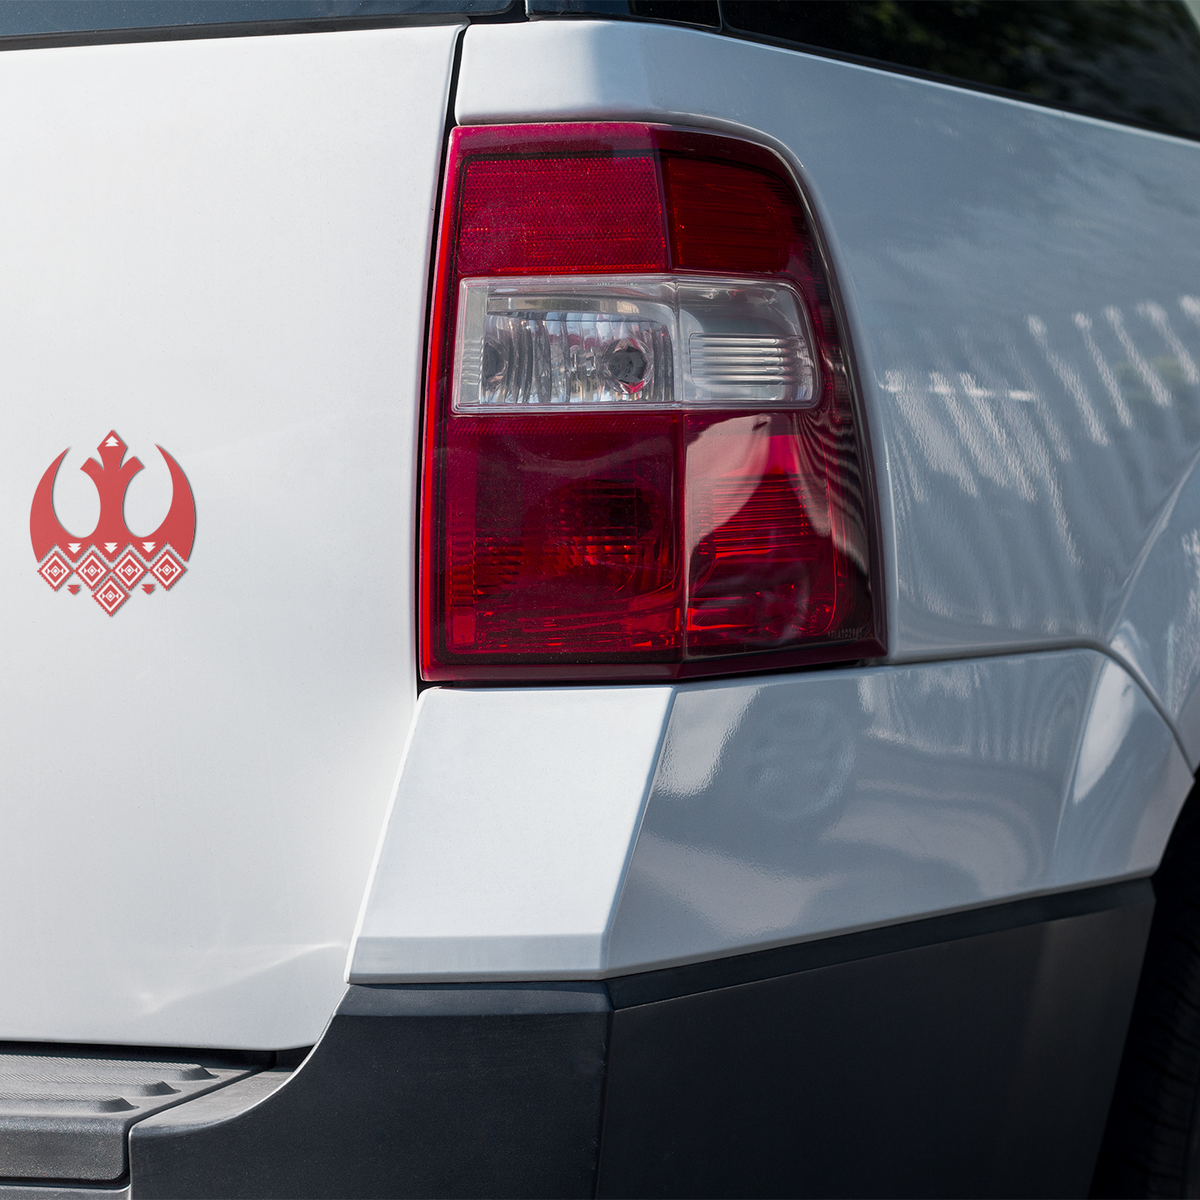 Indigenous Jedi Sticker